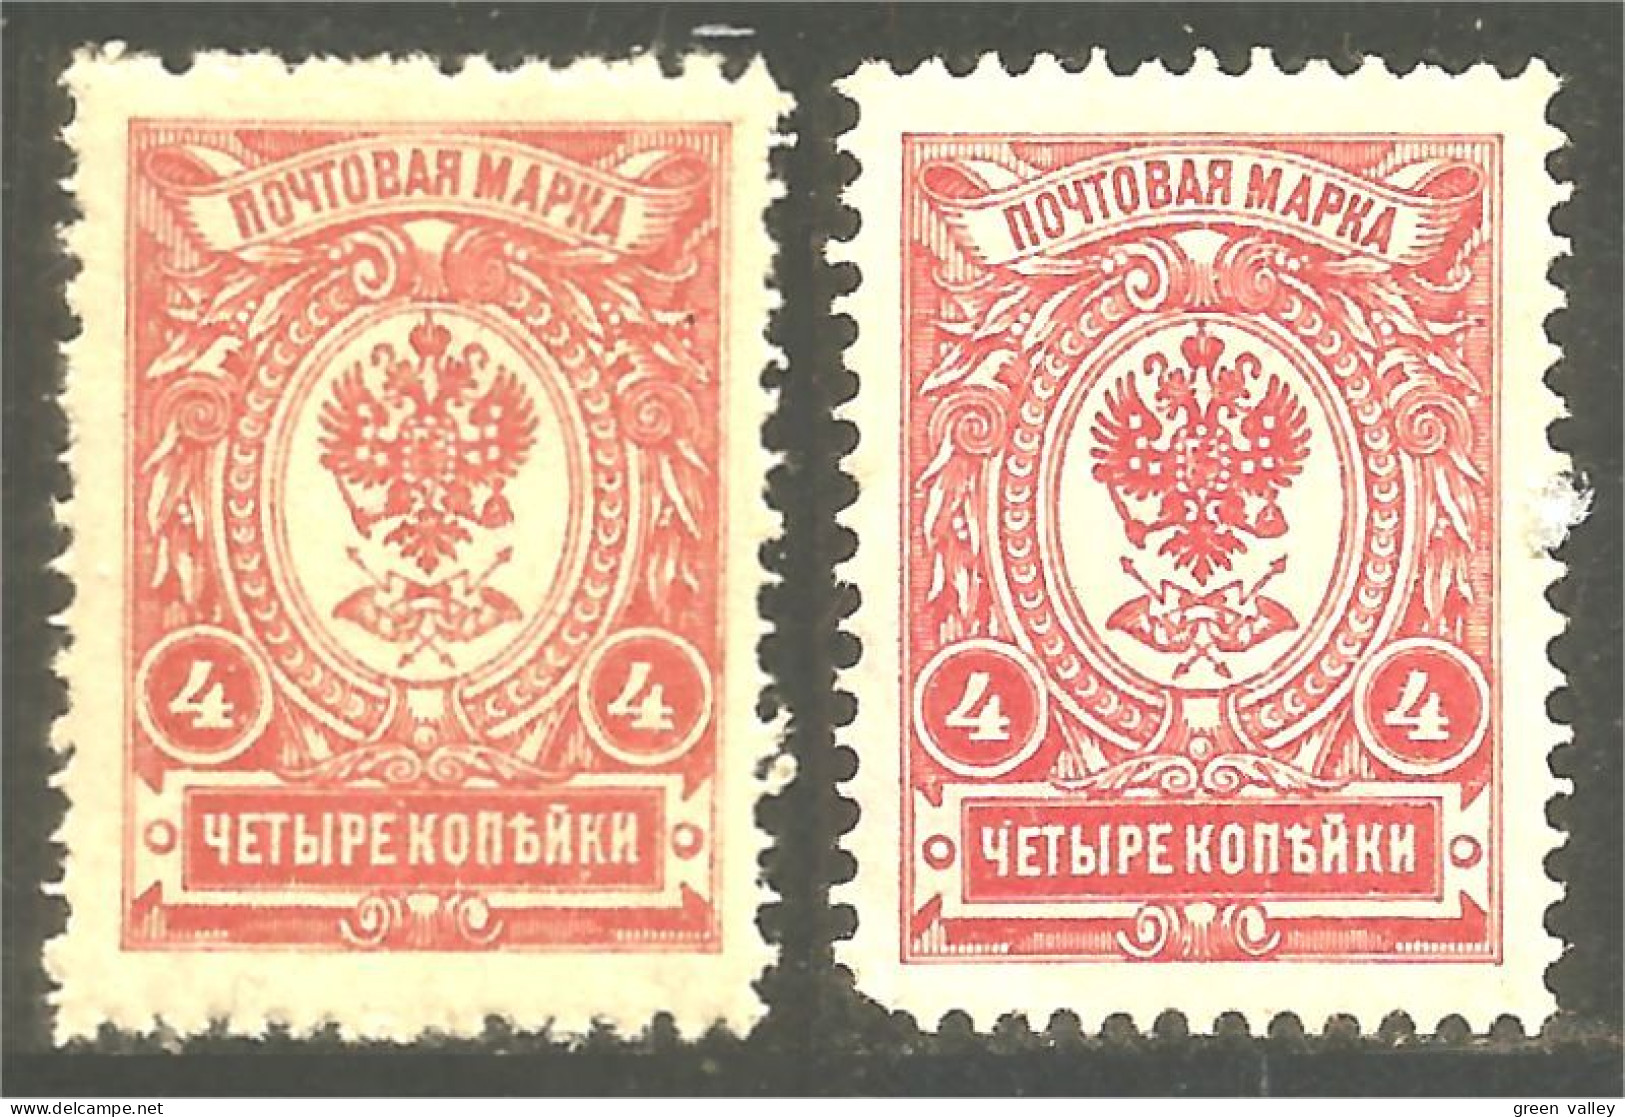 771 Russie 4k 1909 Carmine (mint) Carmine-rose (no Gum) Aigle Imperial Eagle Post Horn Cor Postal Varnish (RUZ-355) - Unused Stamps